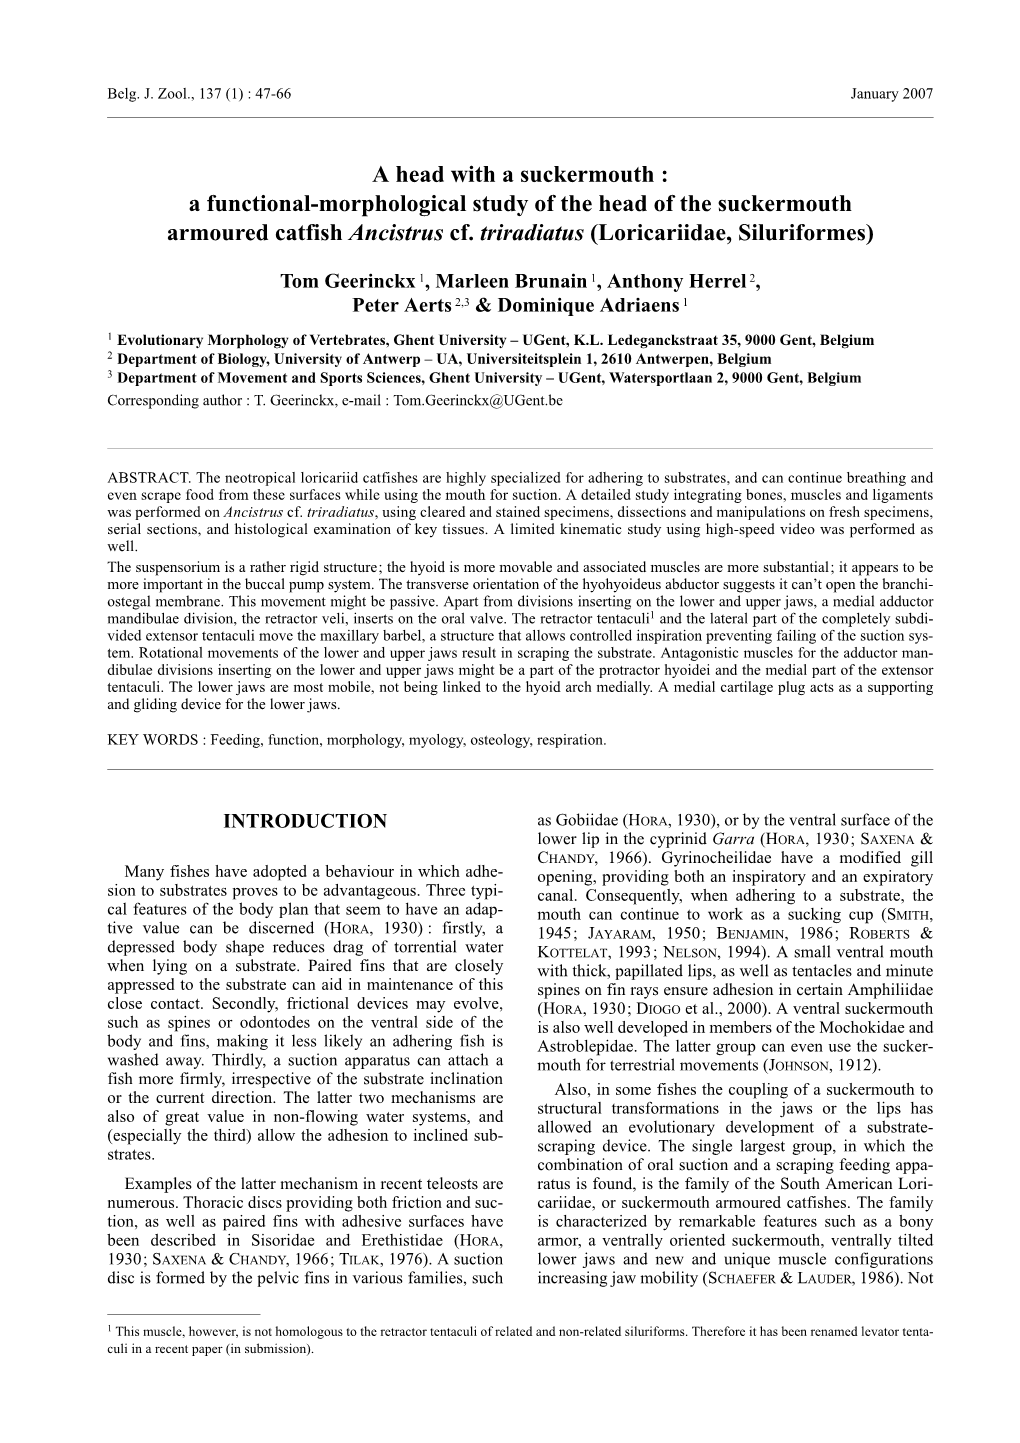 A Functional-Morphological Study of the Head of the Suckermouth Armoured Catfish Ancistrus Cf. Triradiatus (Loricariidae, Siluriformes)